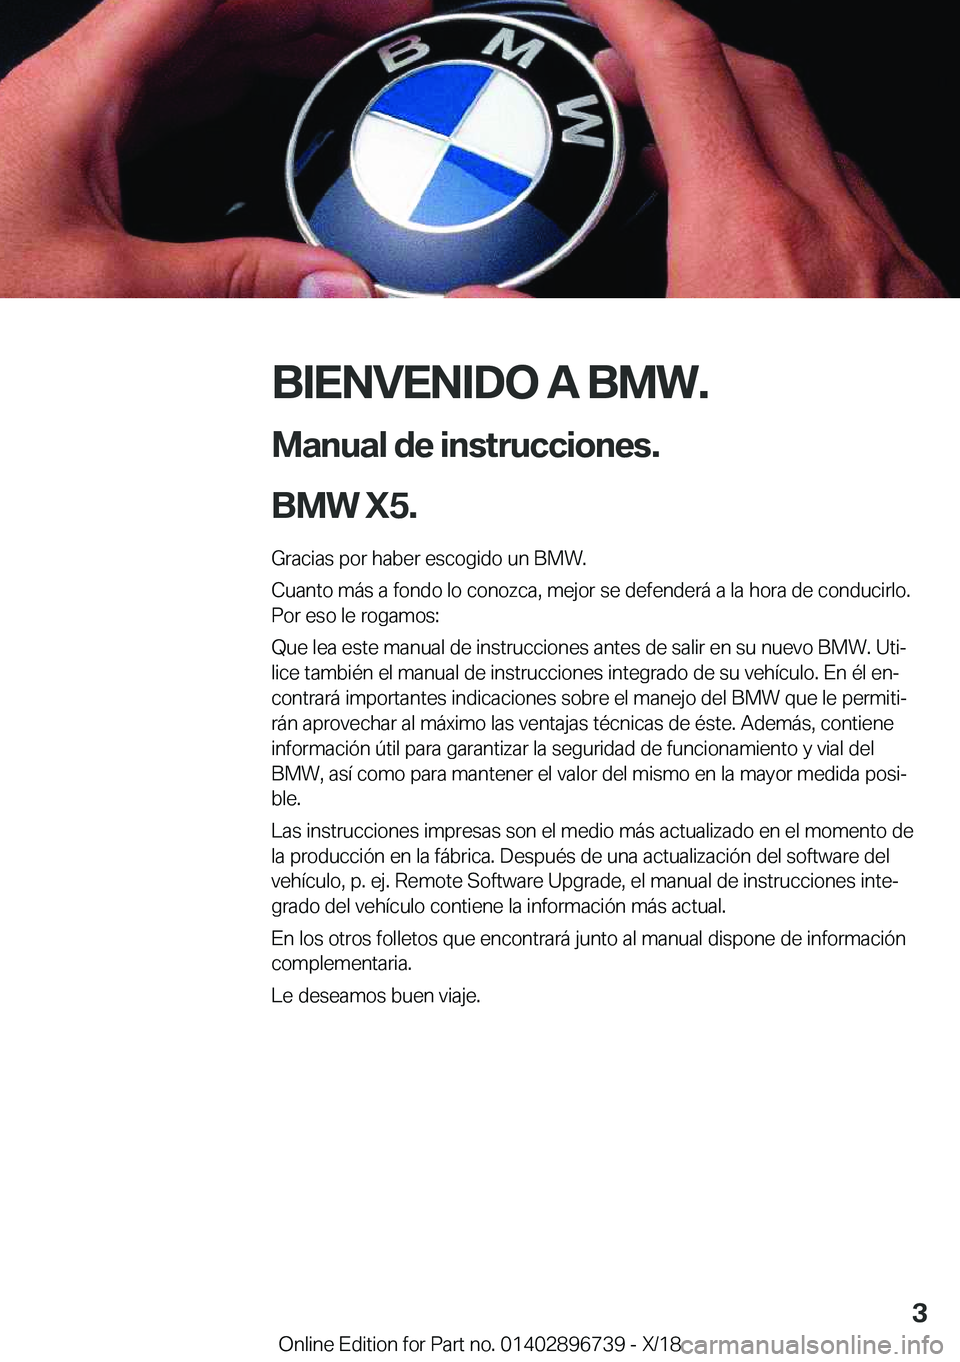 BMW X5 2019  Manuales de Empleo (in Spanish) �B�I�E�N�V�E�N�I�D�O��A��B�M�W�.
�M�a�n�u�a�l��d�e��i�n�s�t�r�u�c�c�i�o�n�e�s�.
�B�M�W��X�5�. �G�r�a�c�i�a�s��p�o�r��h�a�b�e�r��e�s�c�o�g�i�d�o��u�n��B�M�W�.�C�u�a�n�t�o��m�